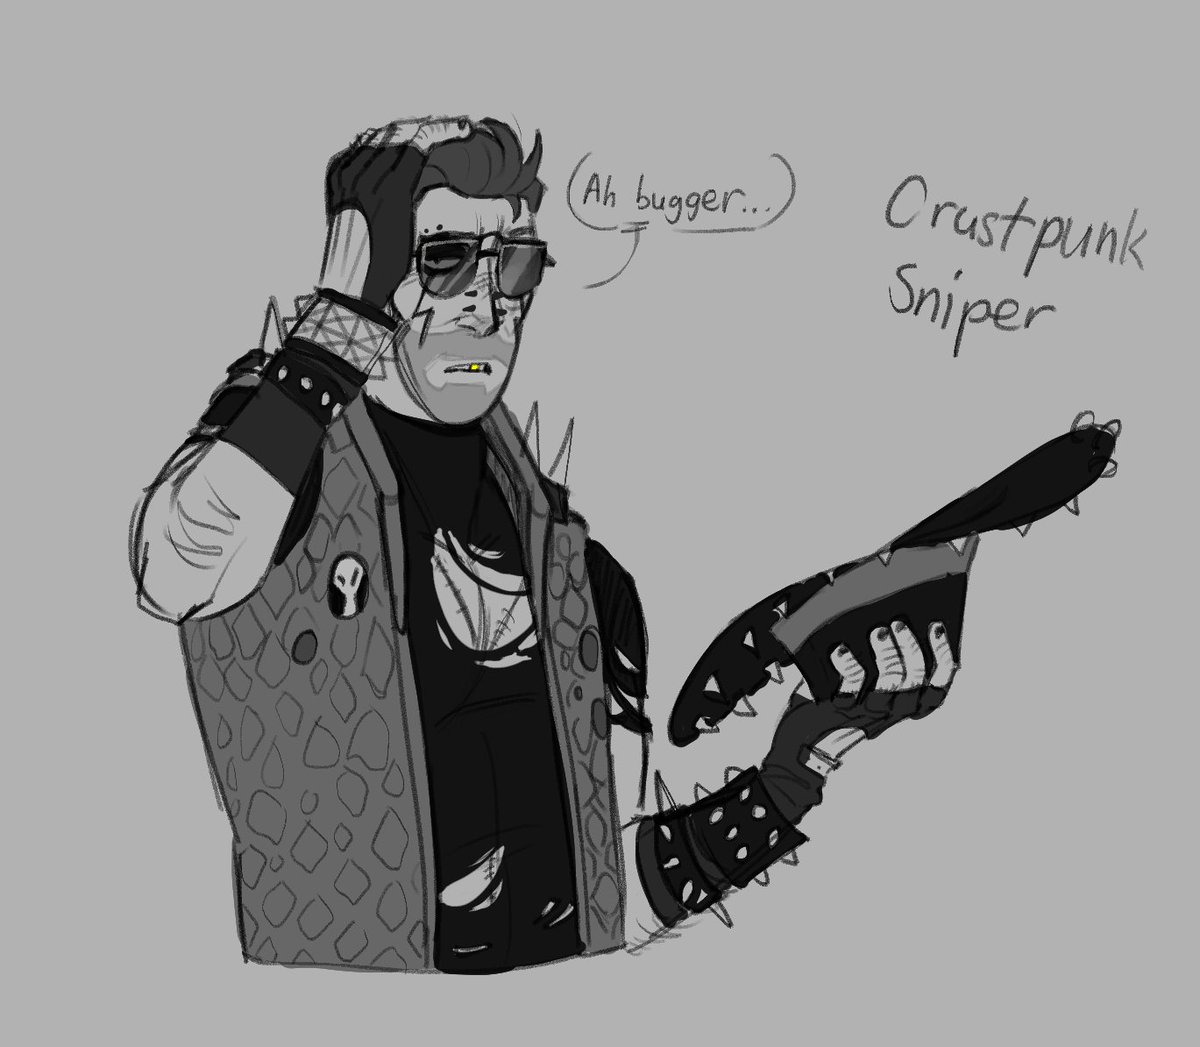 Crustpunk Sniper ehehehehe >:3
his vest is made from crocodile skin